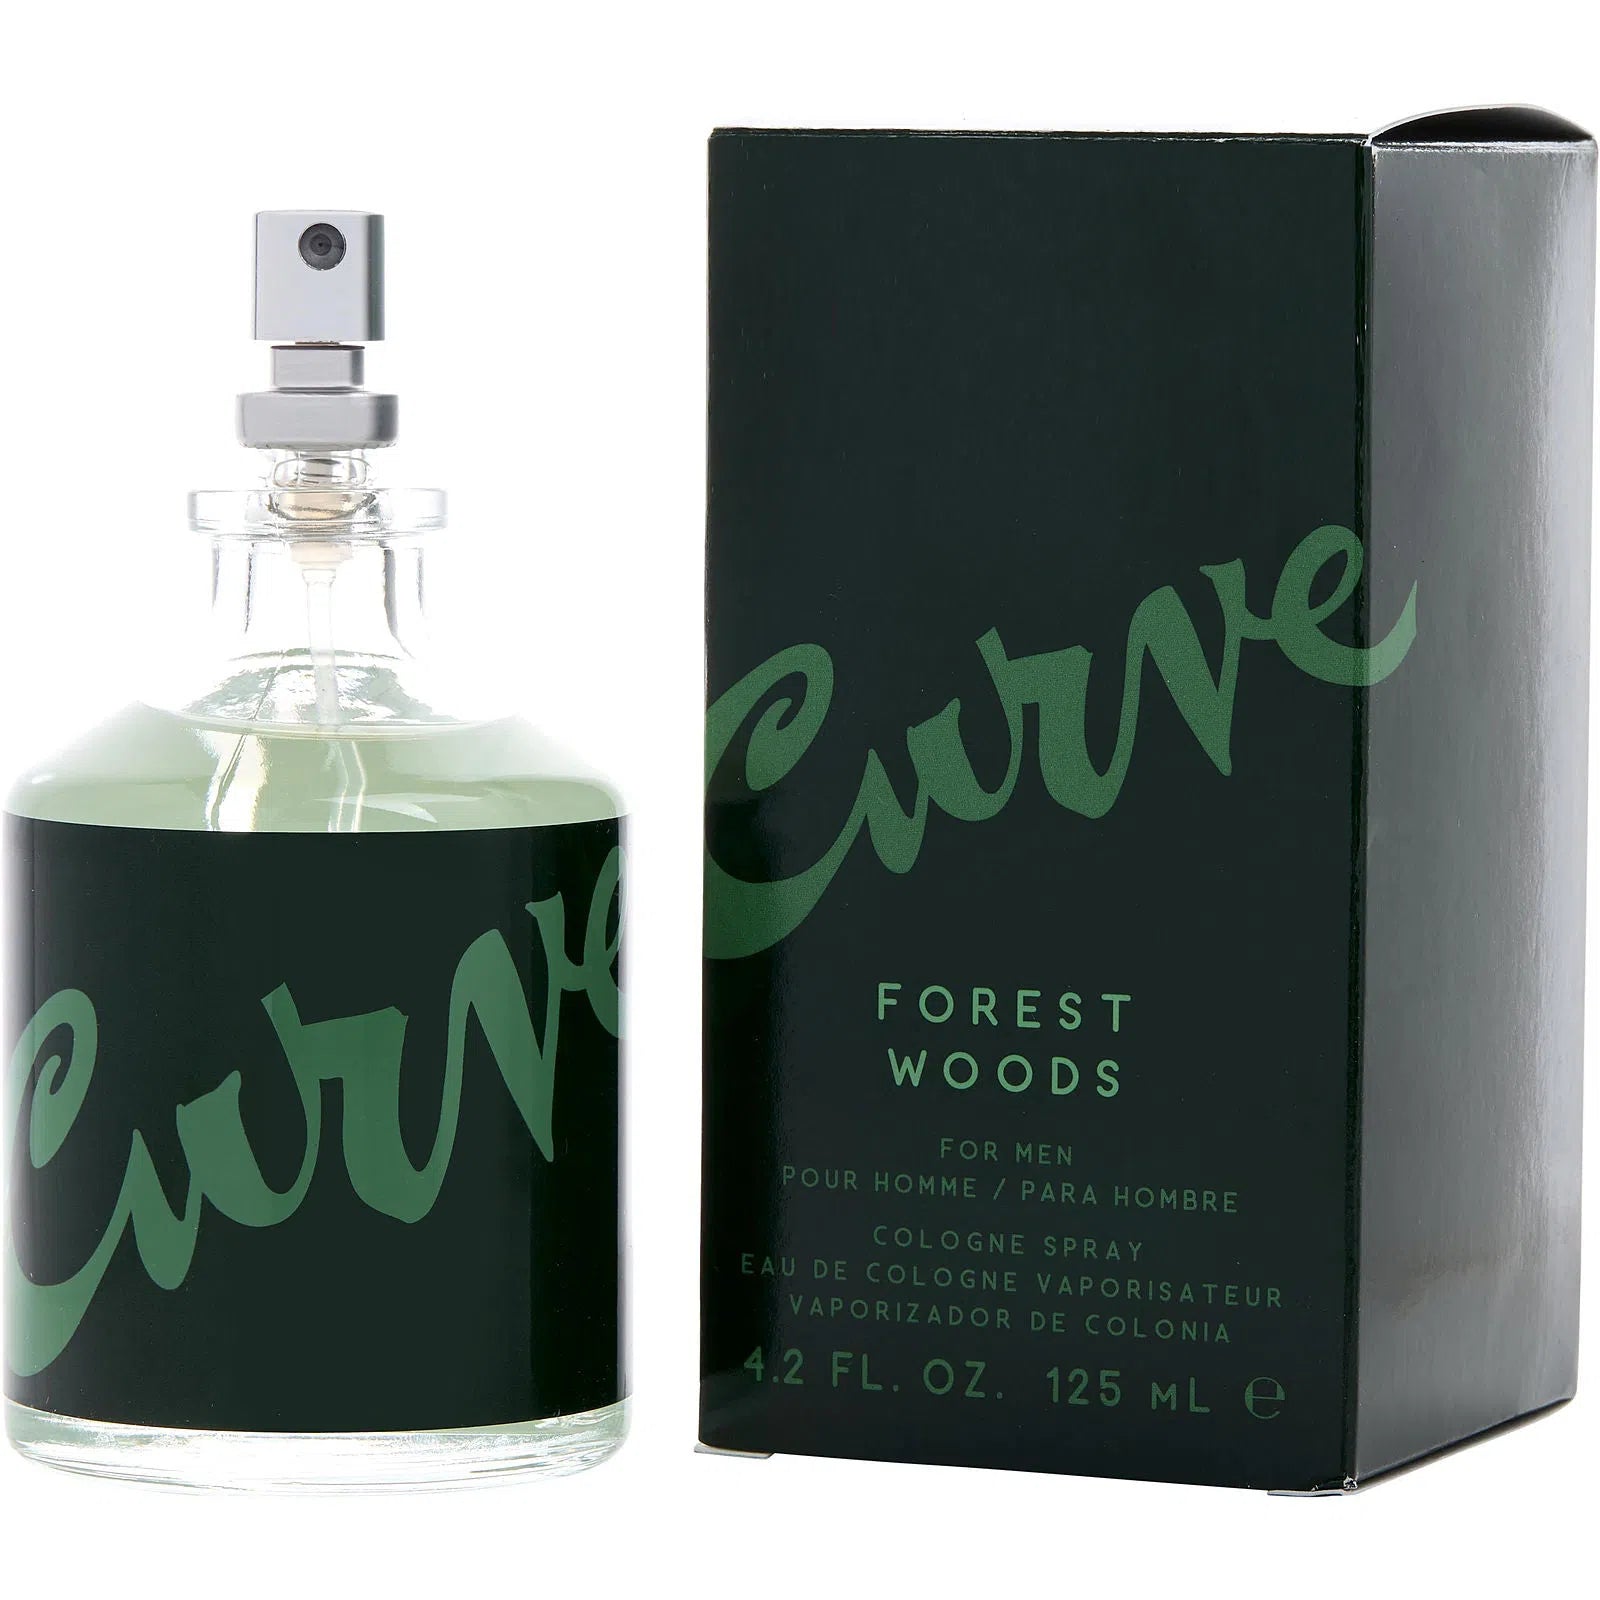 Perfume Liz Claiborne Curve Forest Woods EDC (M) / 125 ml - 719346263443- Prive Perfumes Honduras